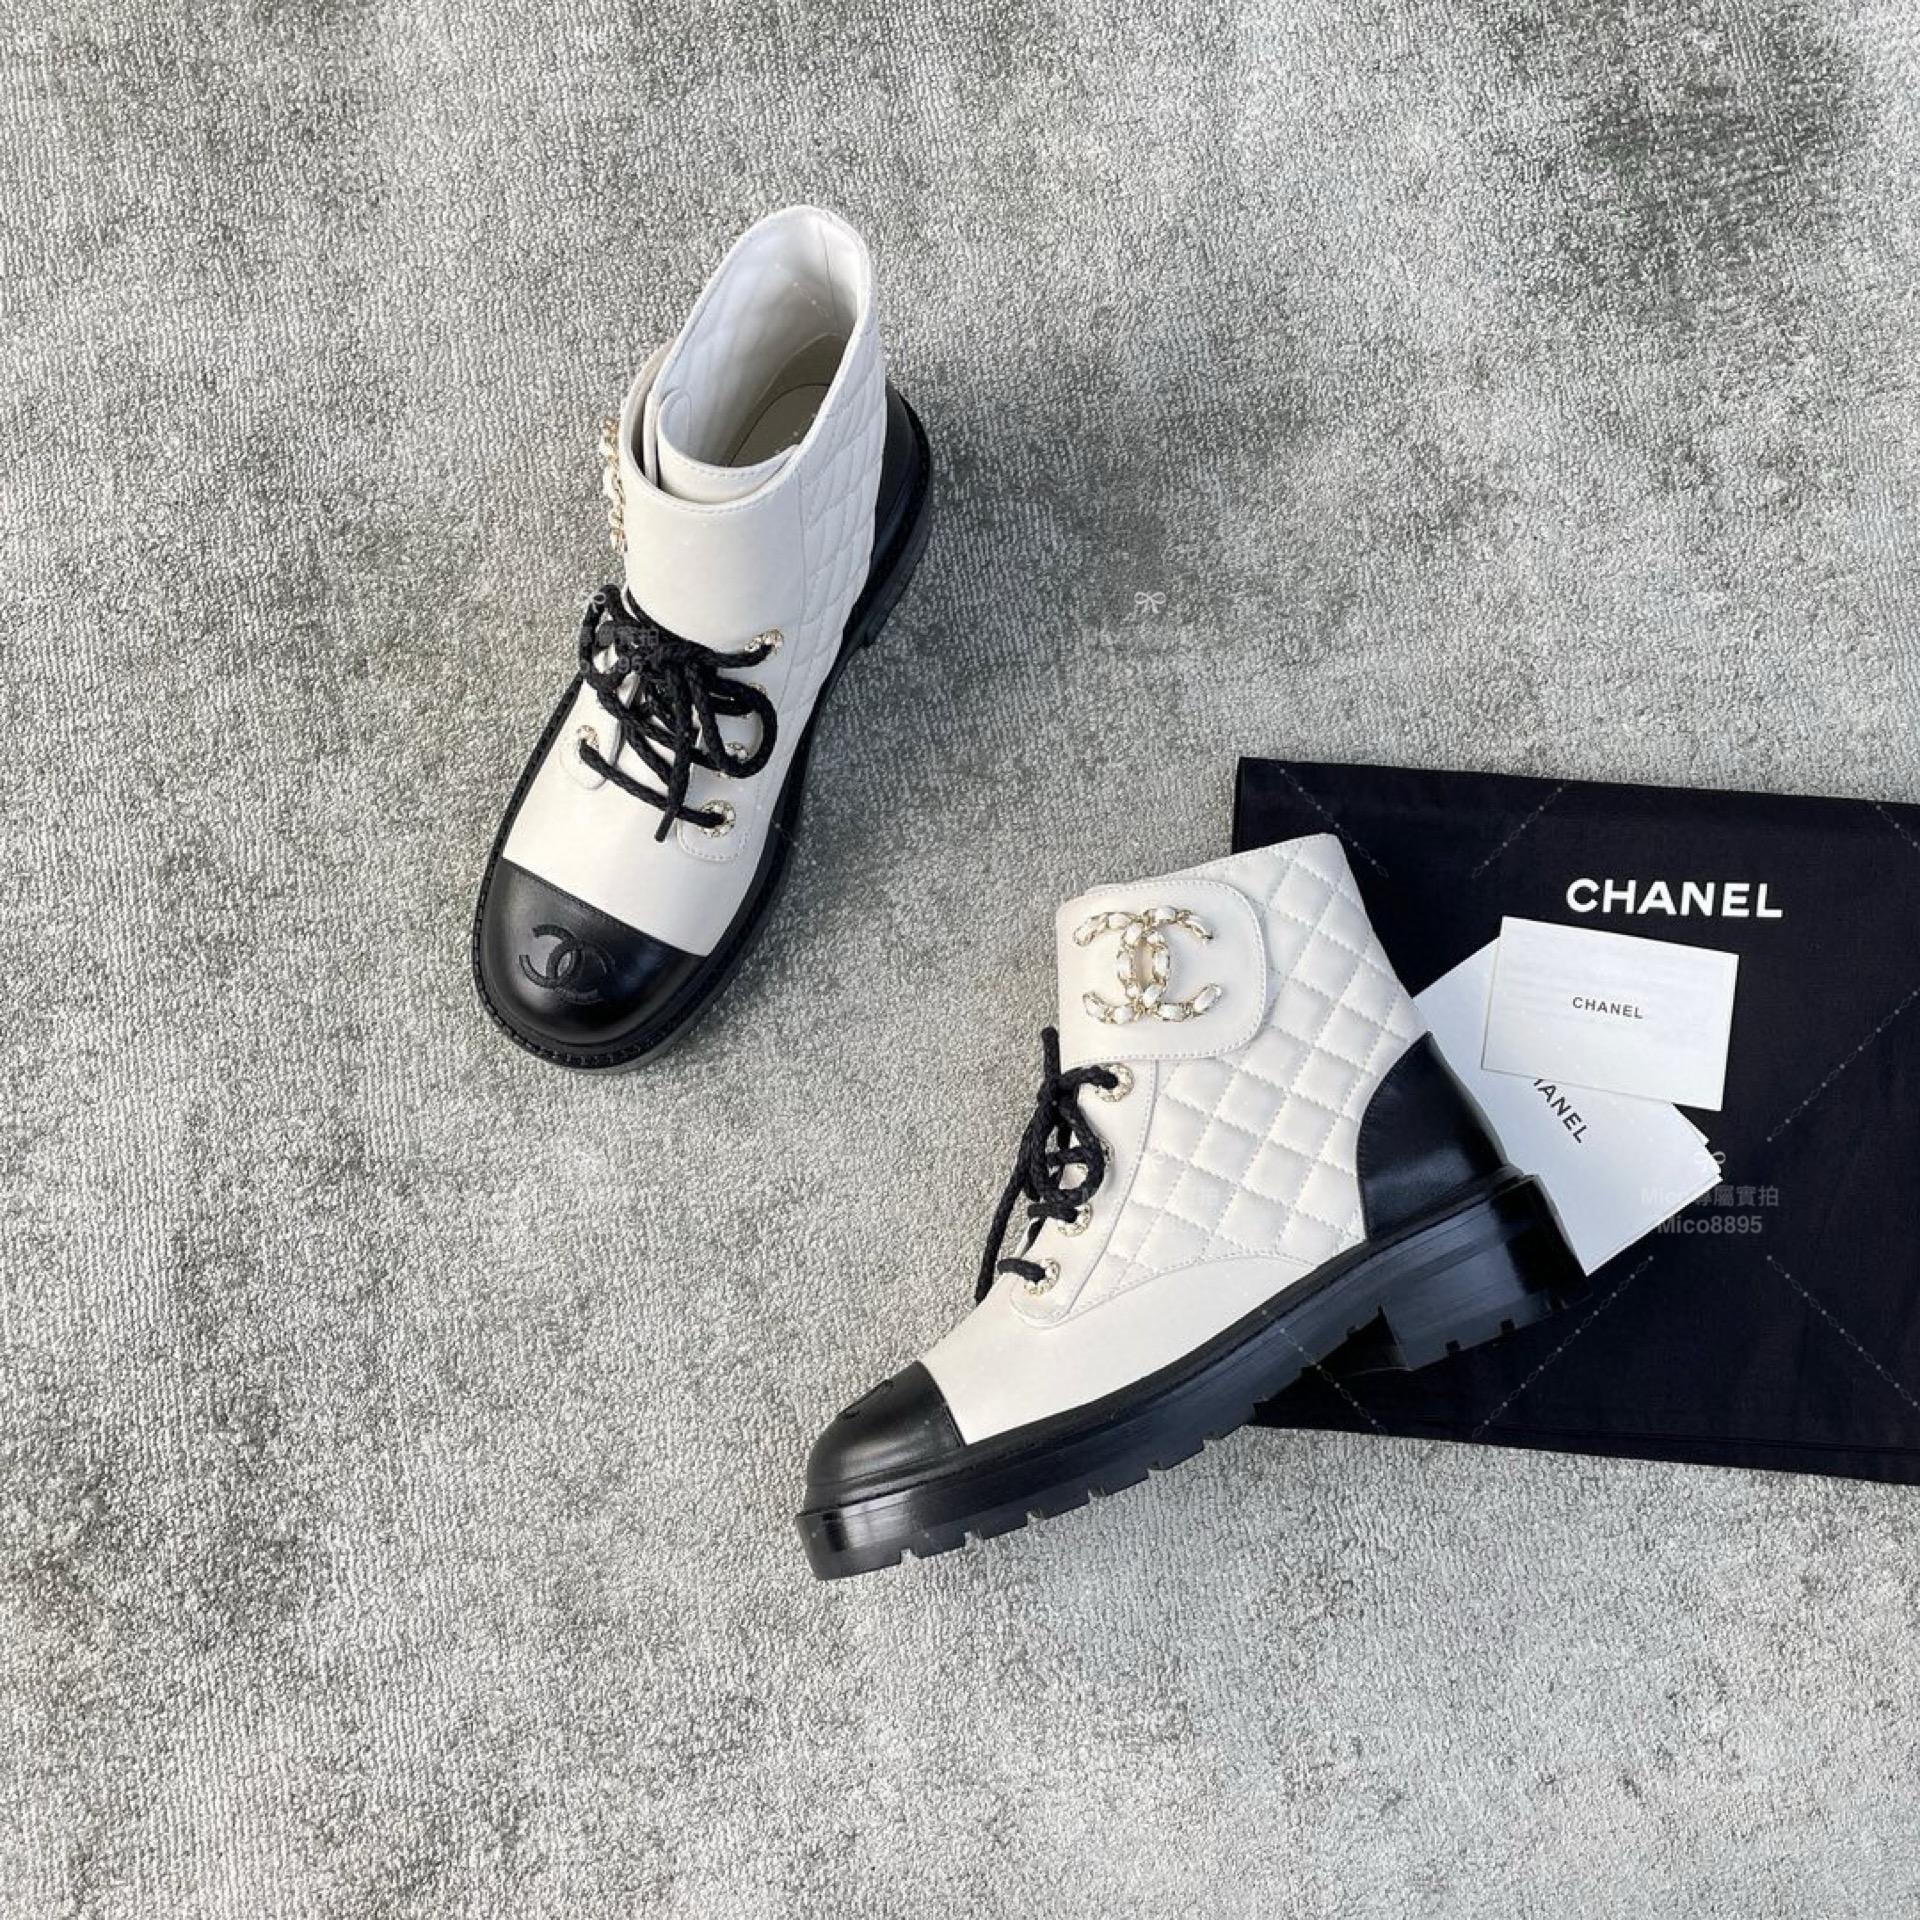 Chanel 經典菱格紋機車靴/短靴/ 啞光白色 SIZE 35-39(可訂製40）